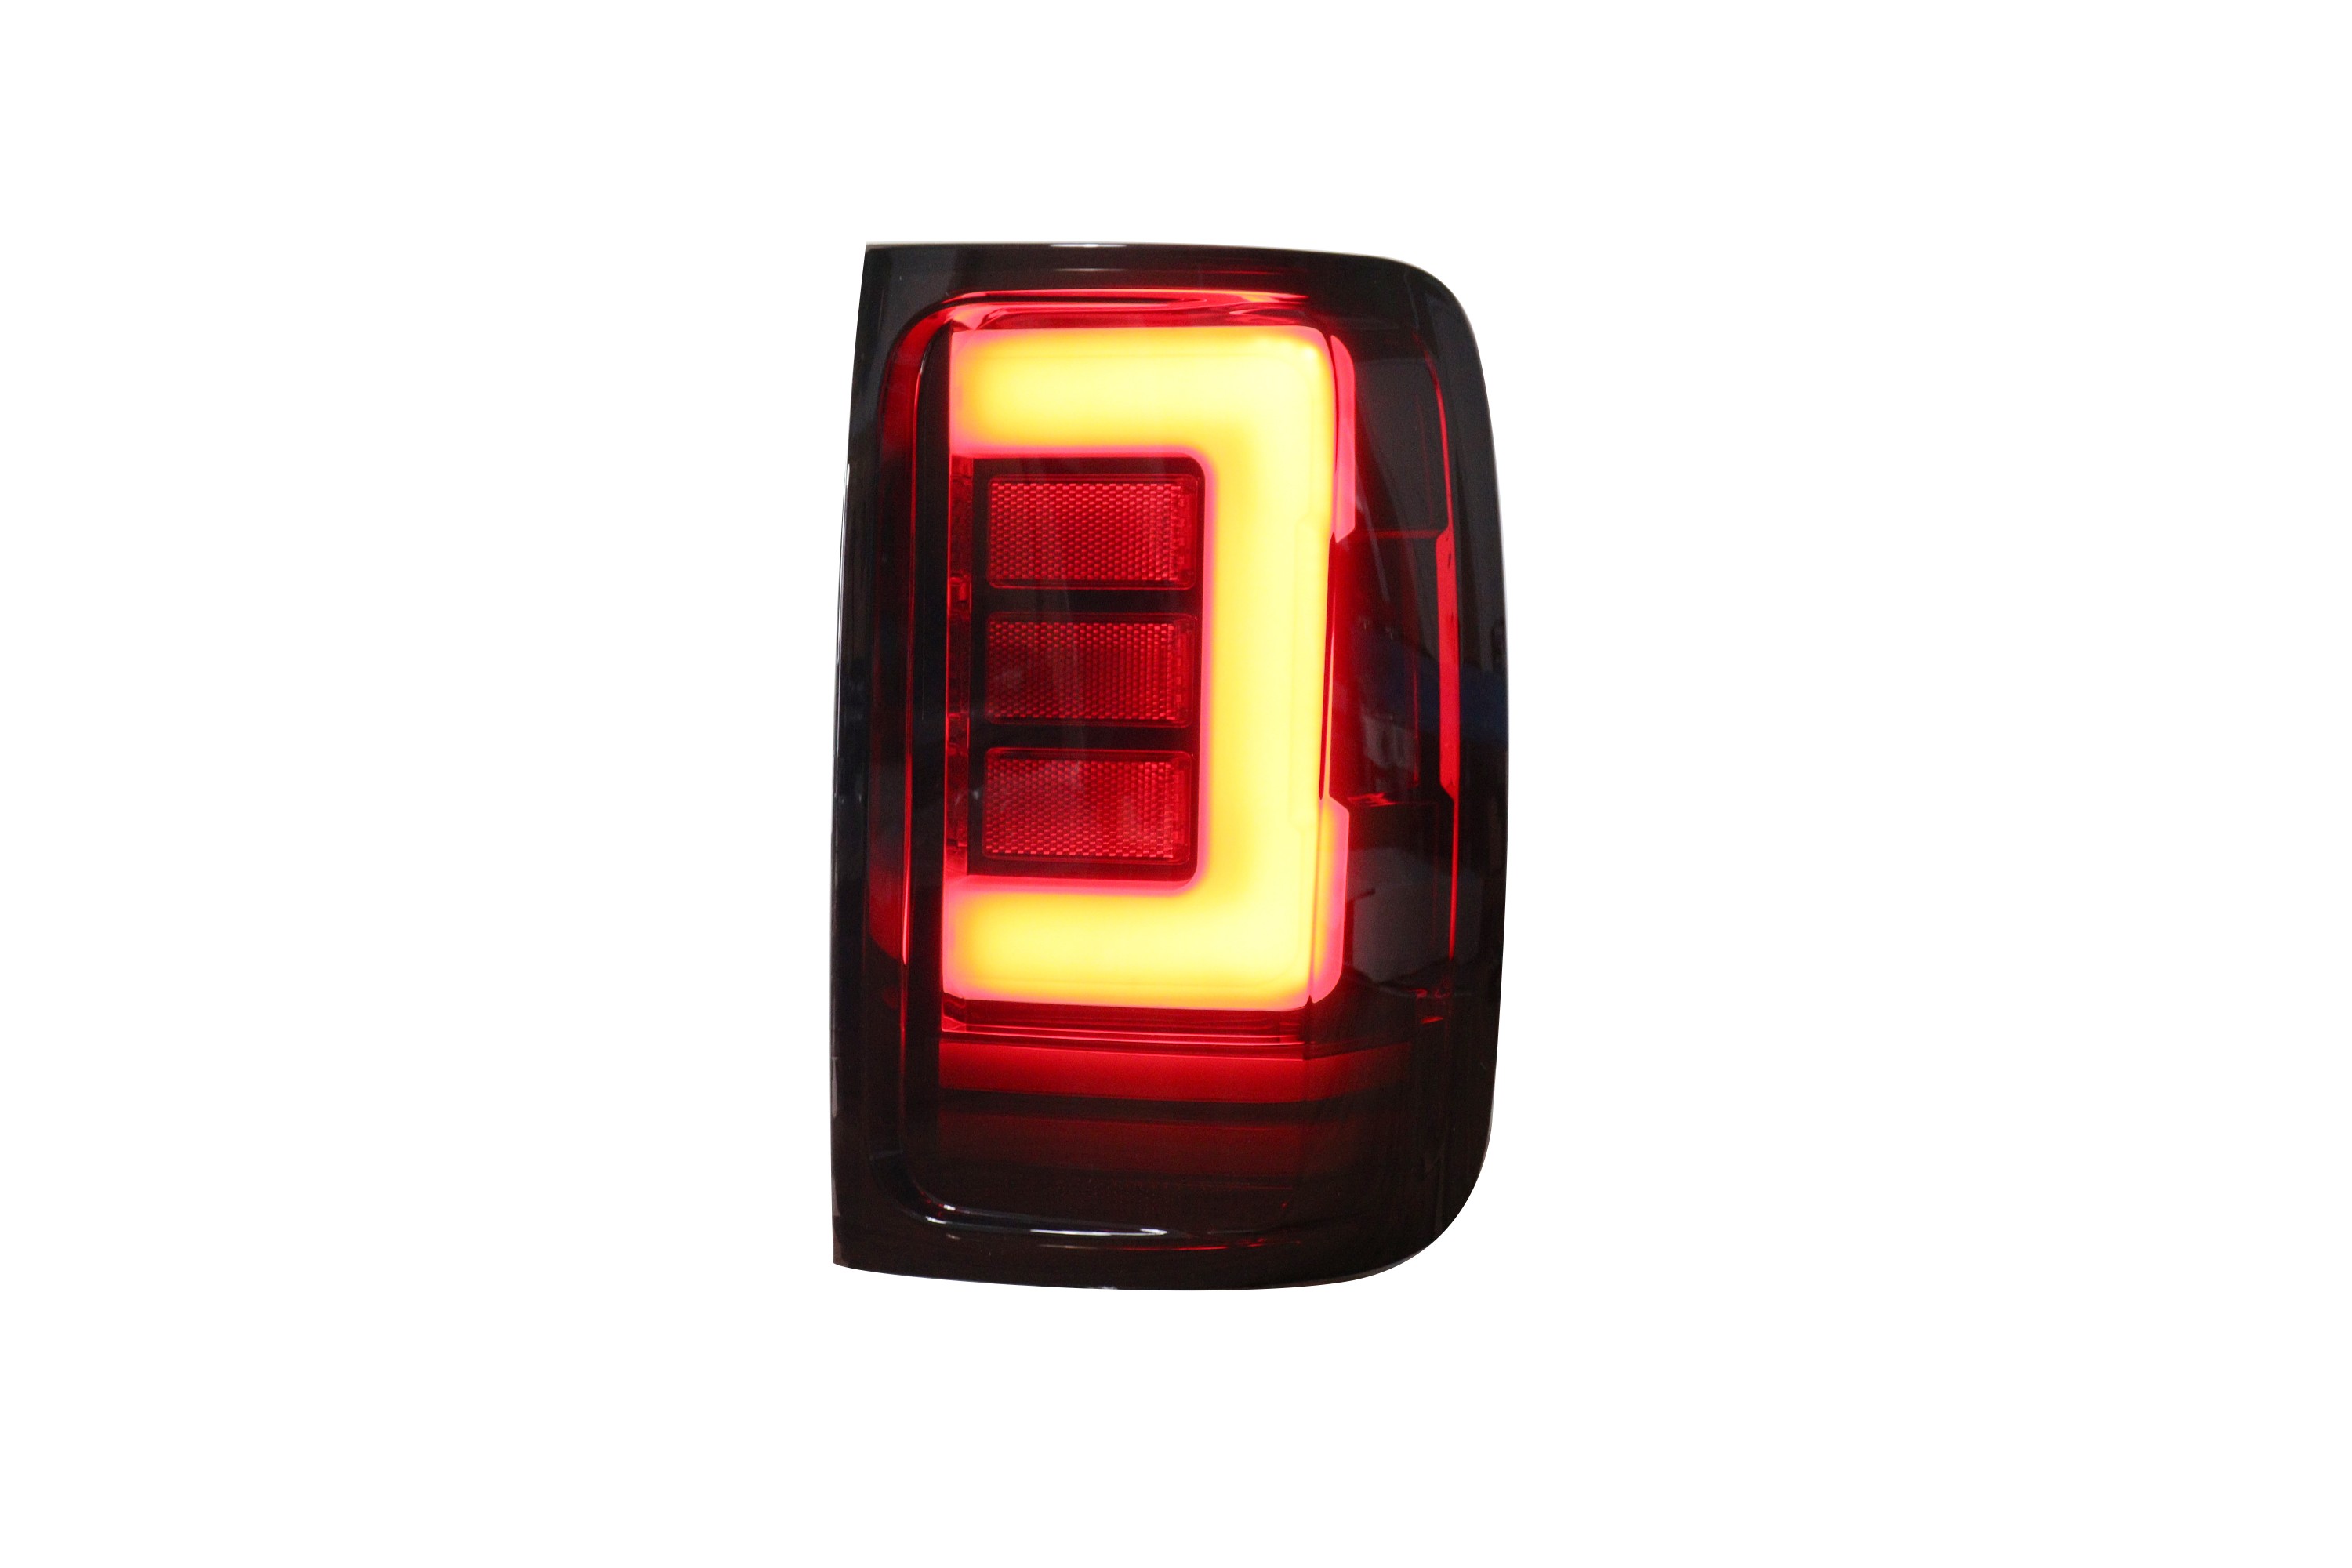 Geling Amarok 2012 12V 55W Smoke Red Two Color Rear Light Tail Lamp Back Light For V. W. Amorok 2012-2019